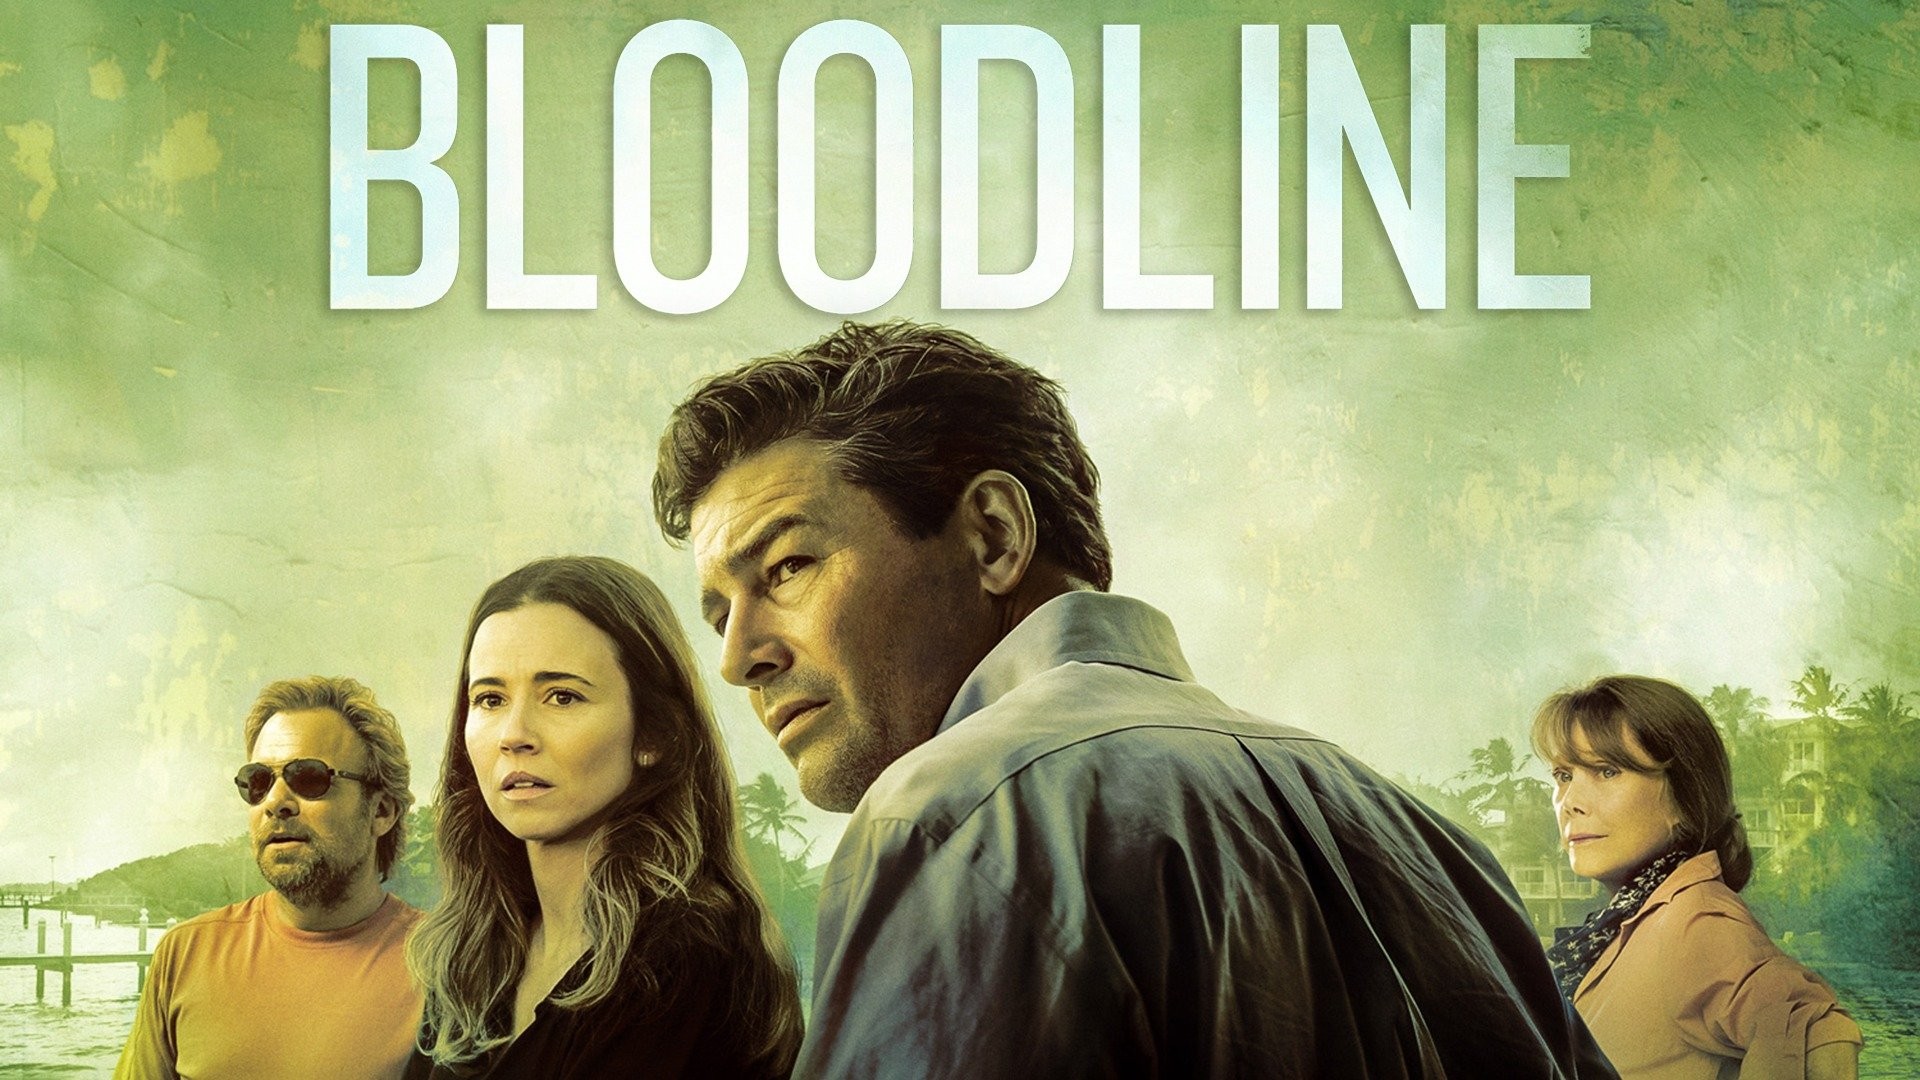 Bloodline series poster from Netflix